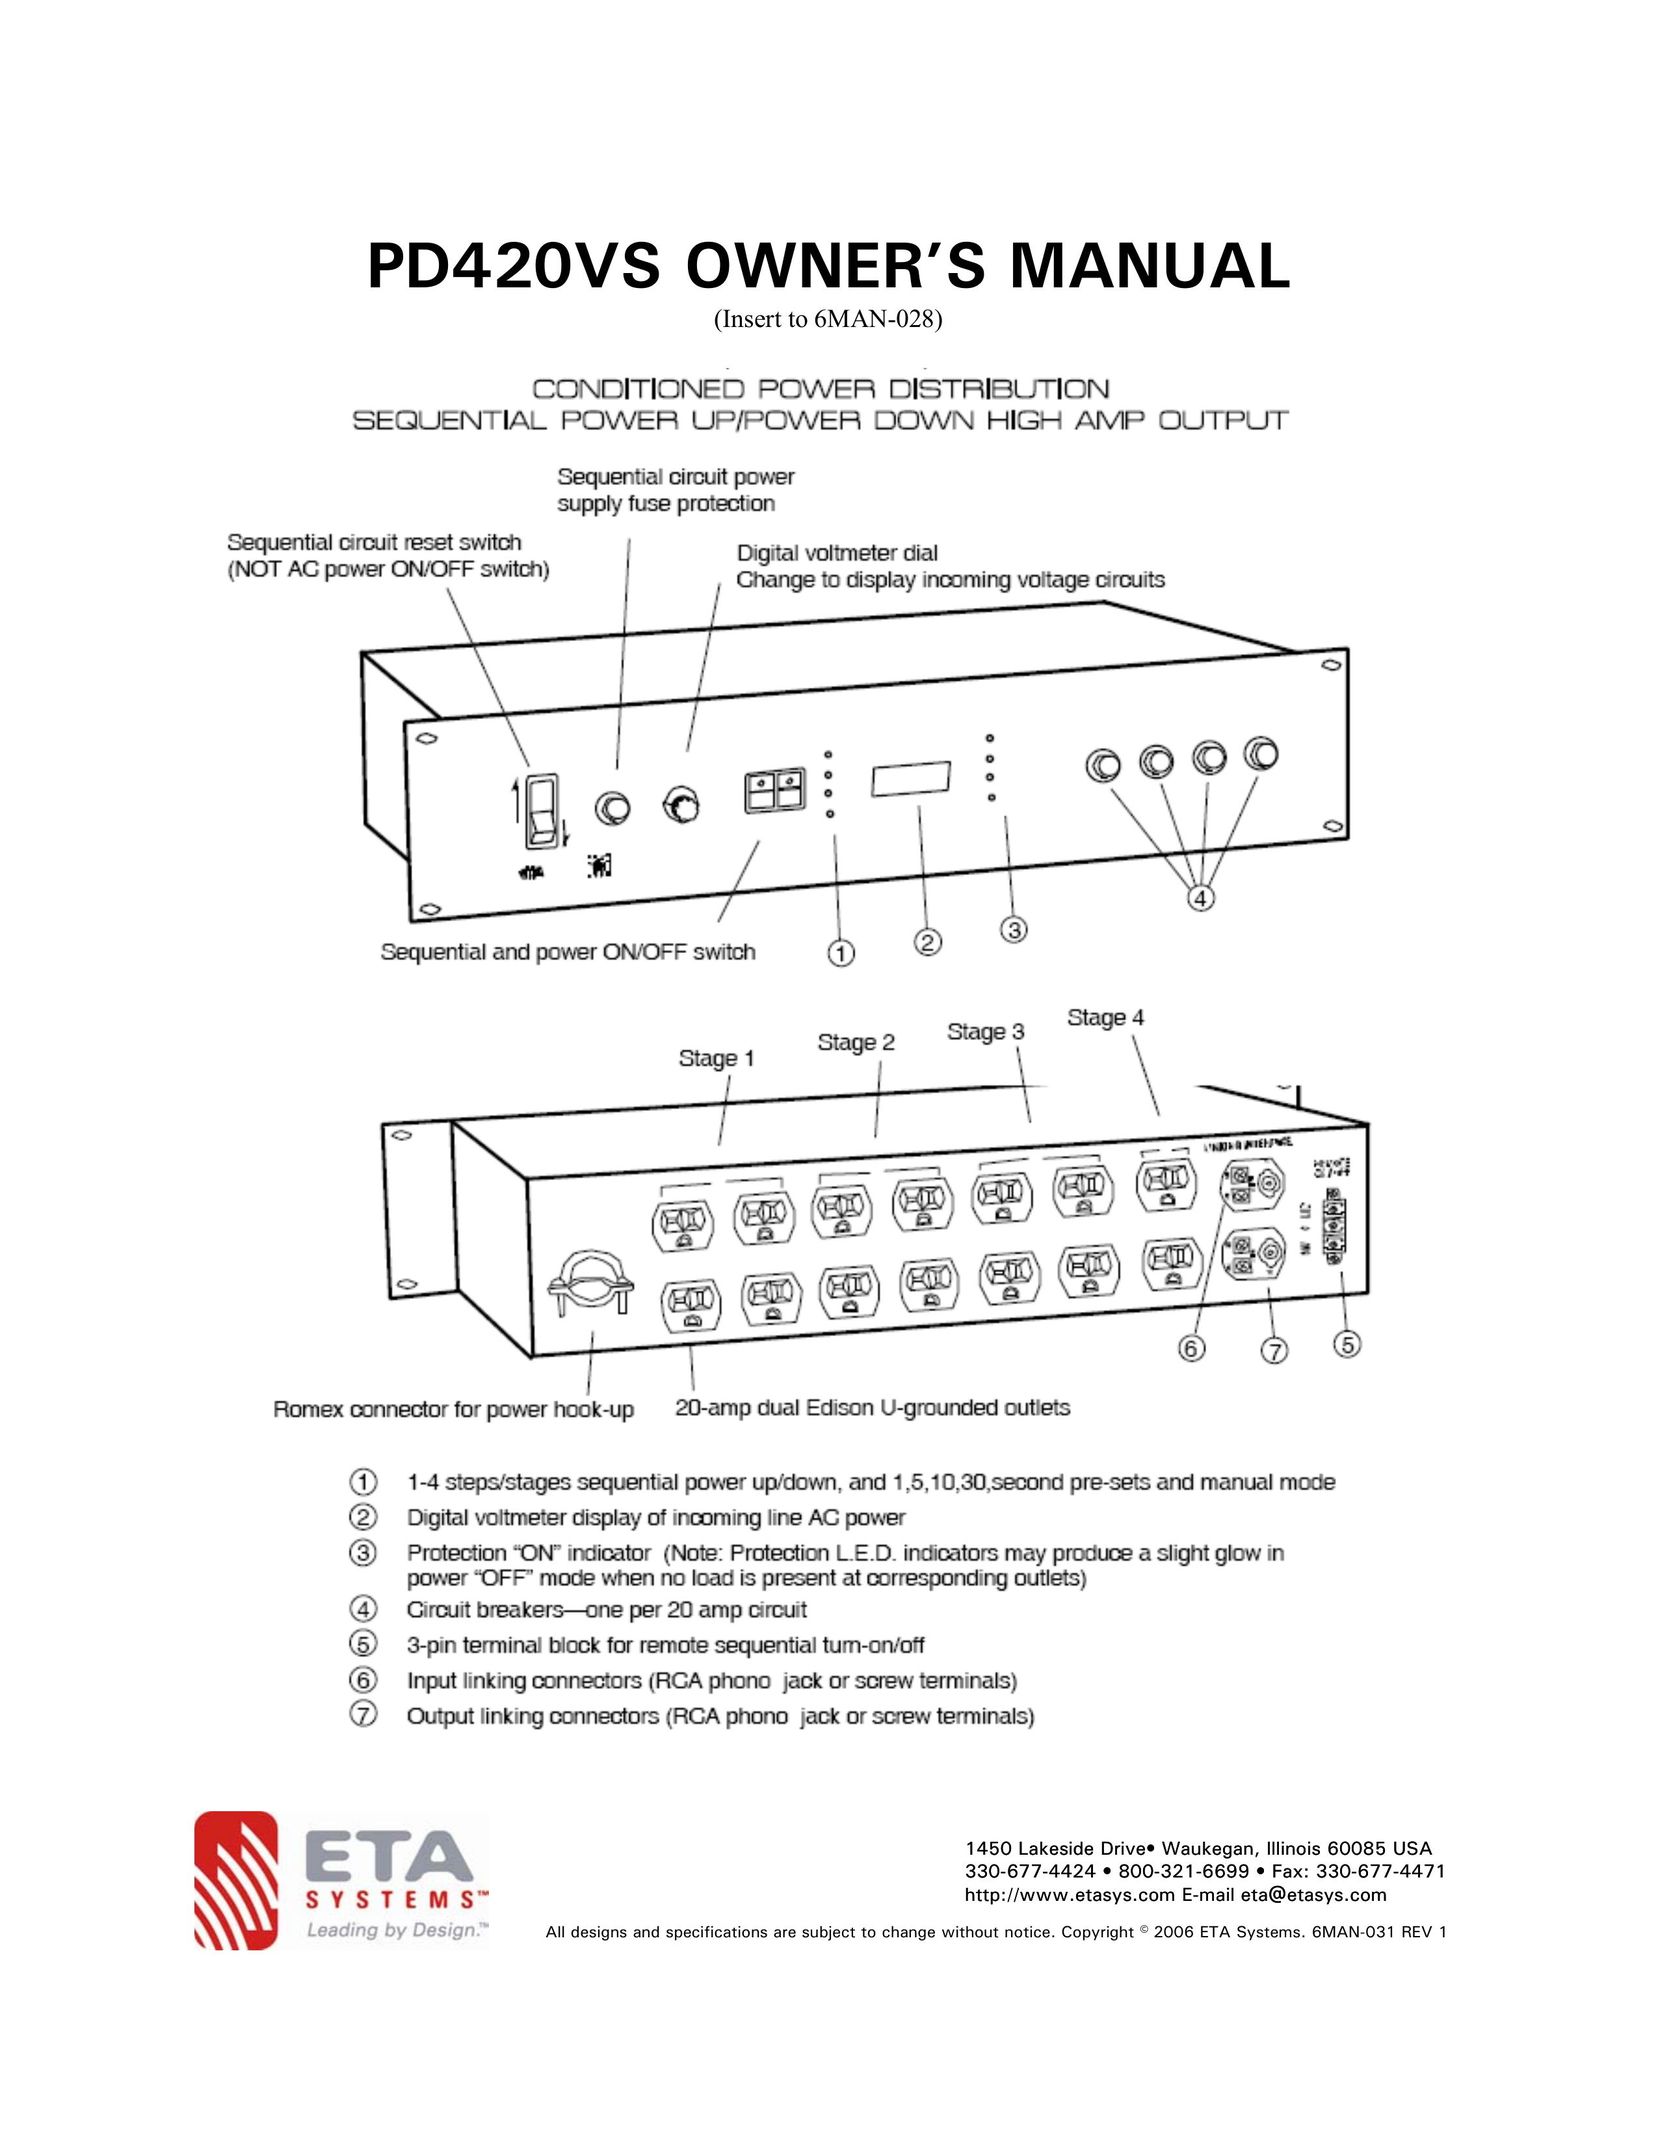 ETA Systems PD420VS Power Supply User Manual